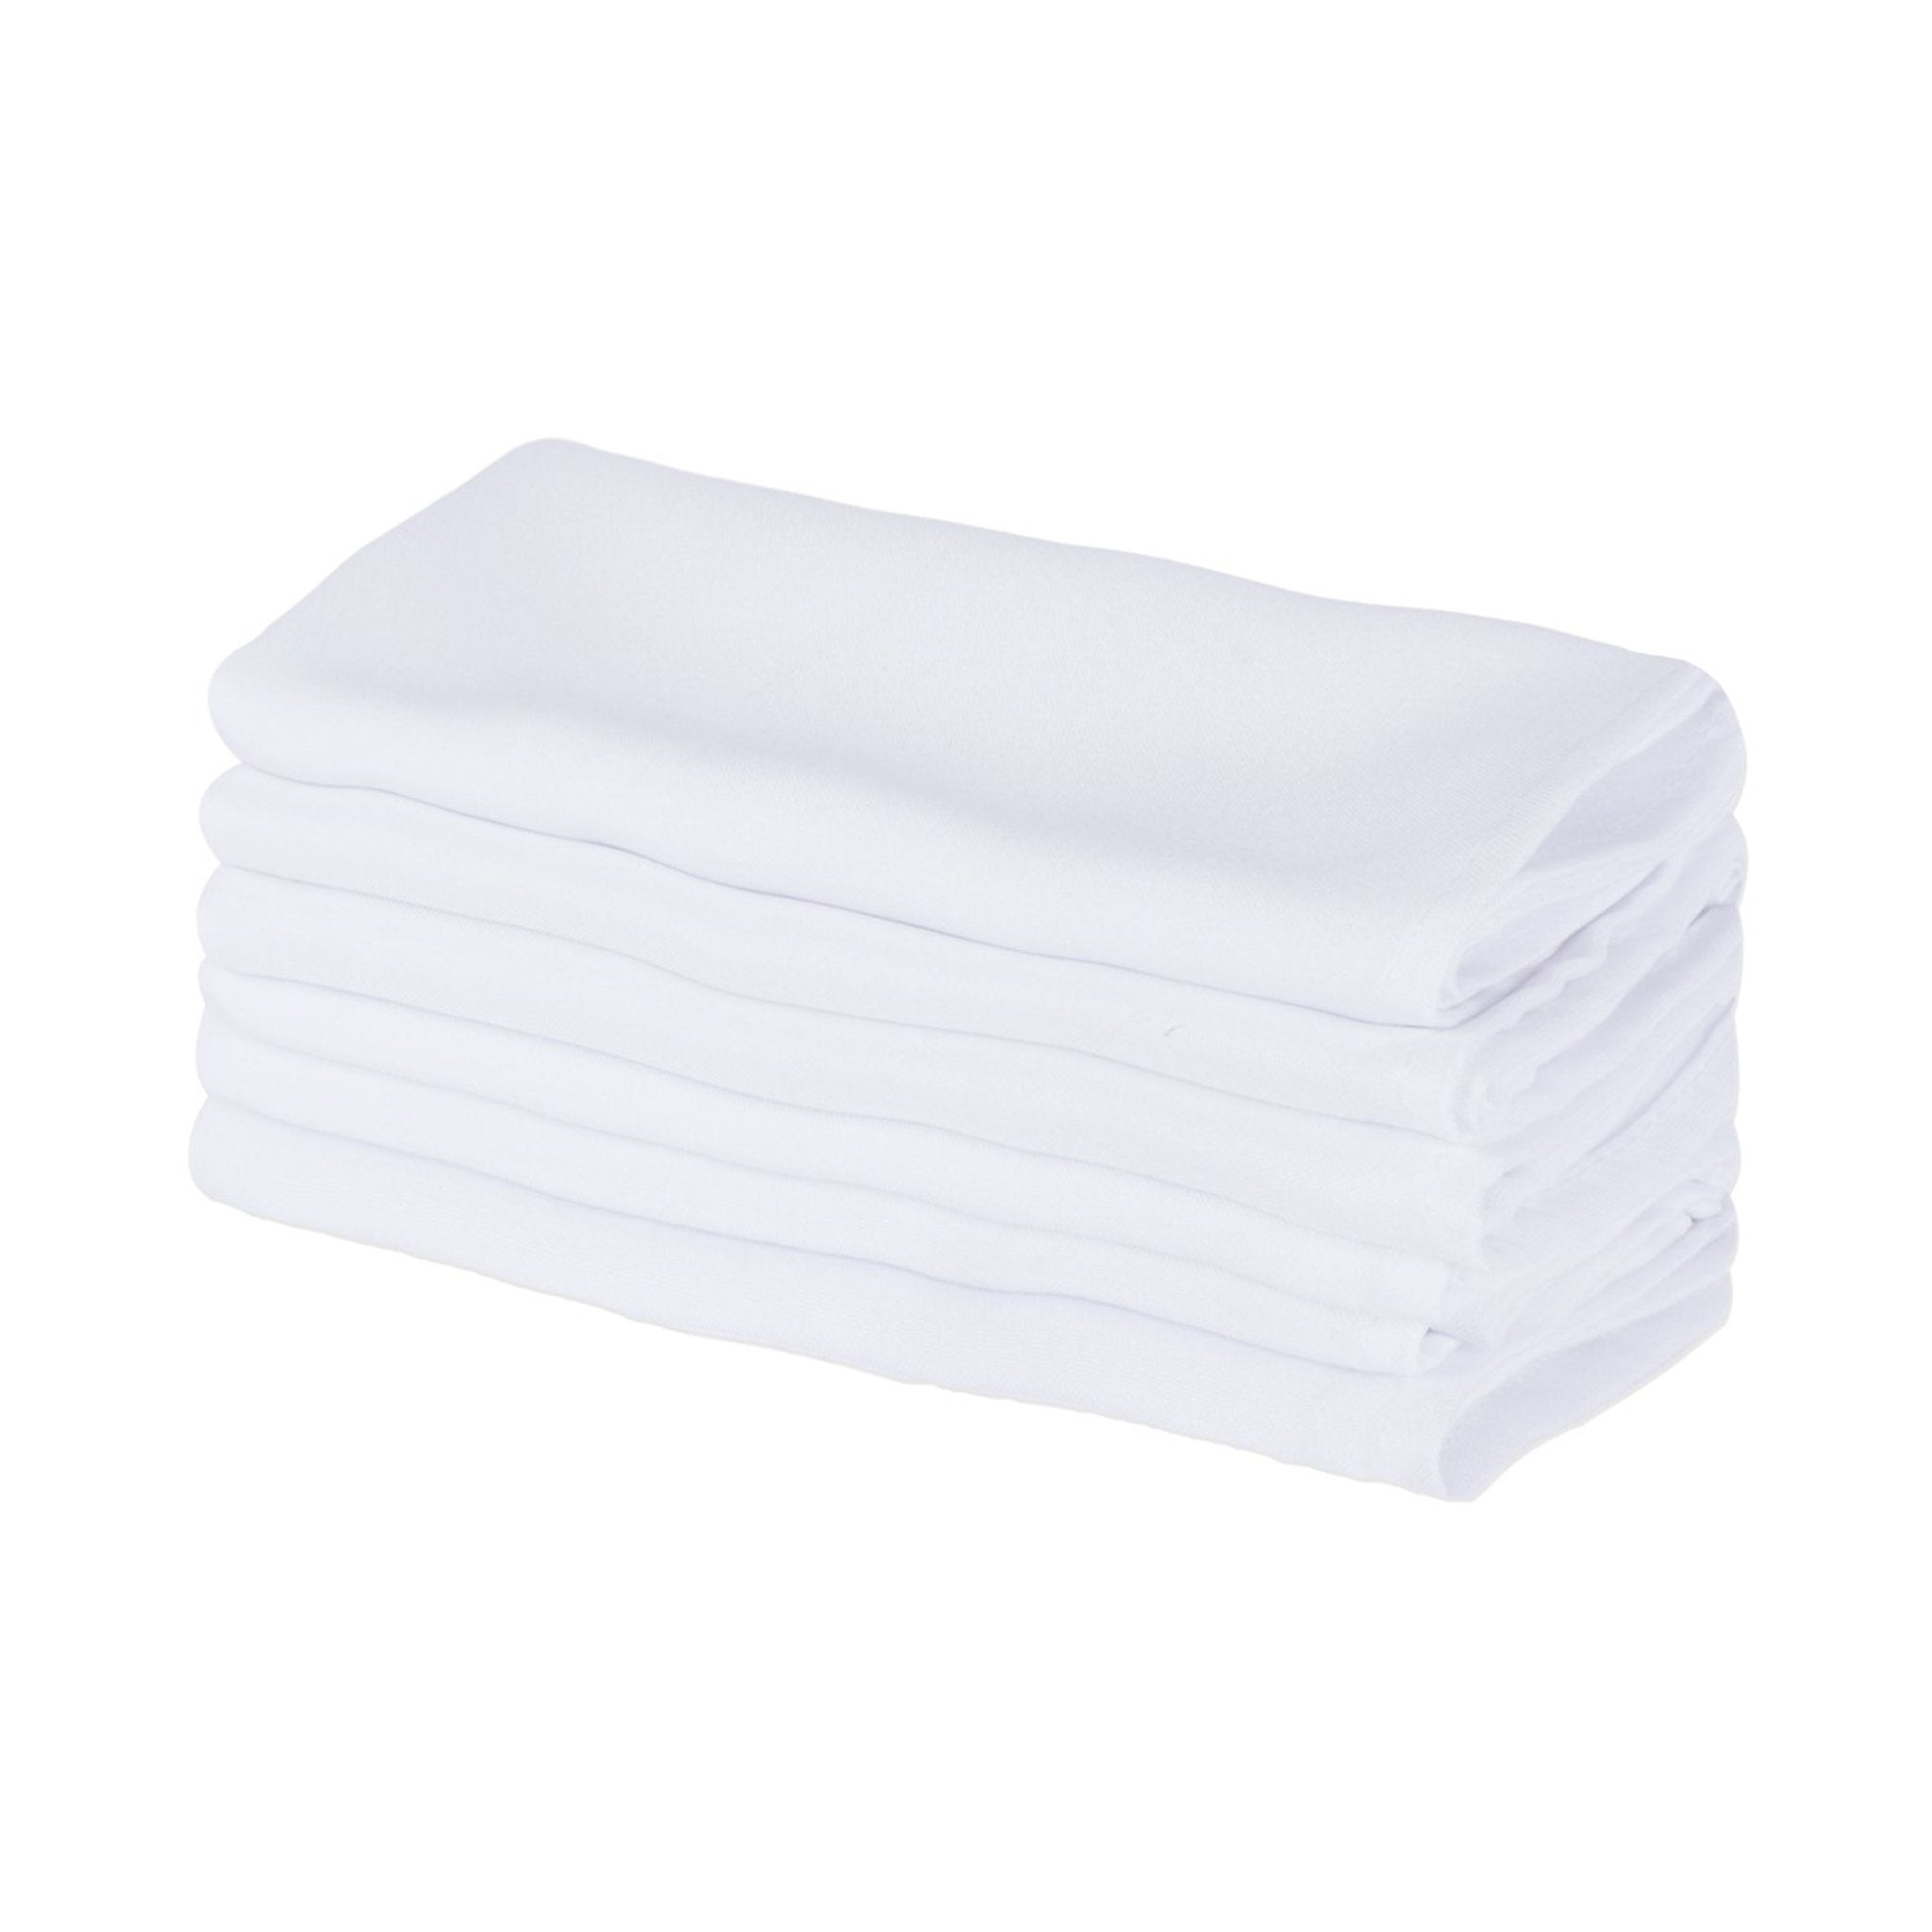 White Commercial Quality 18x18 Napkins, Set of 6 - Napkins